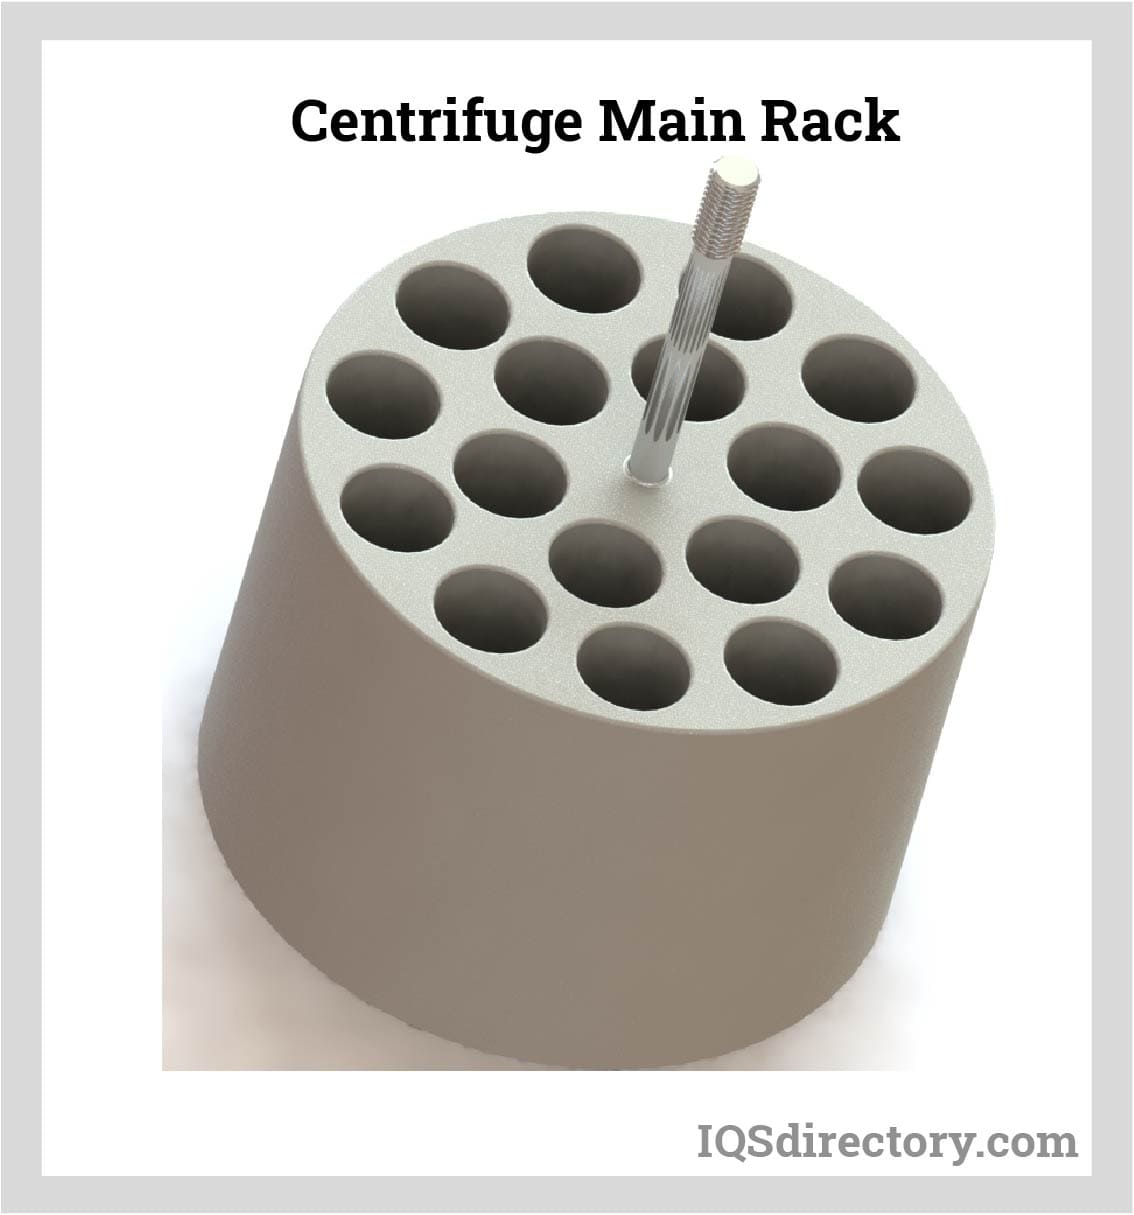 Centrifuge Main Rack